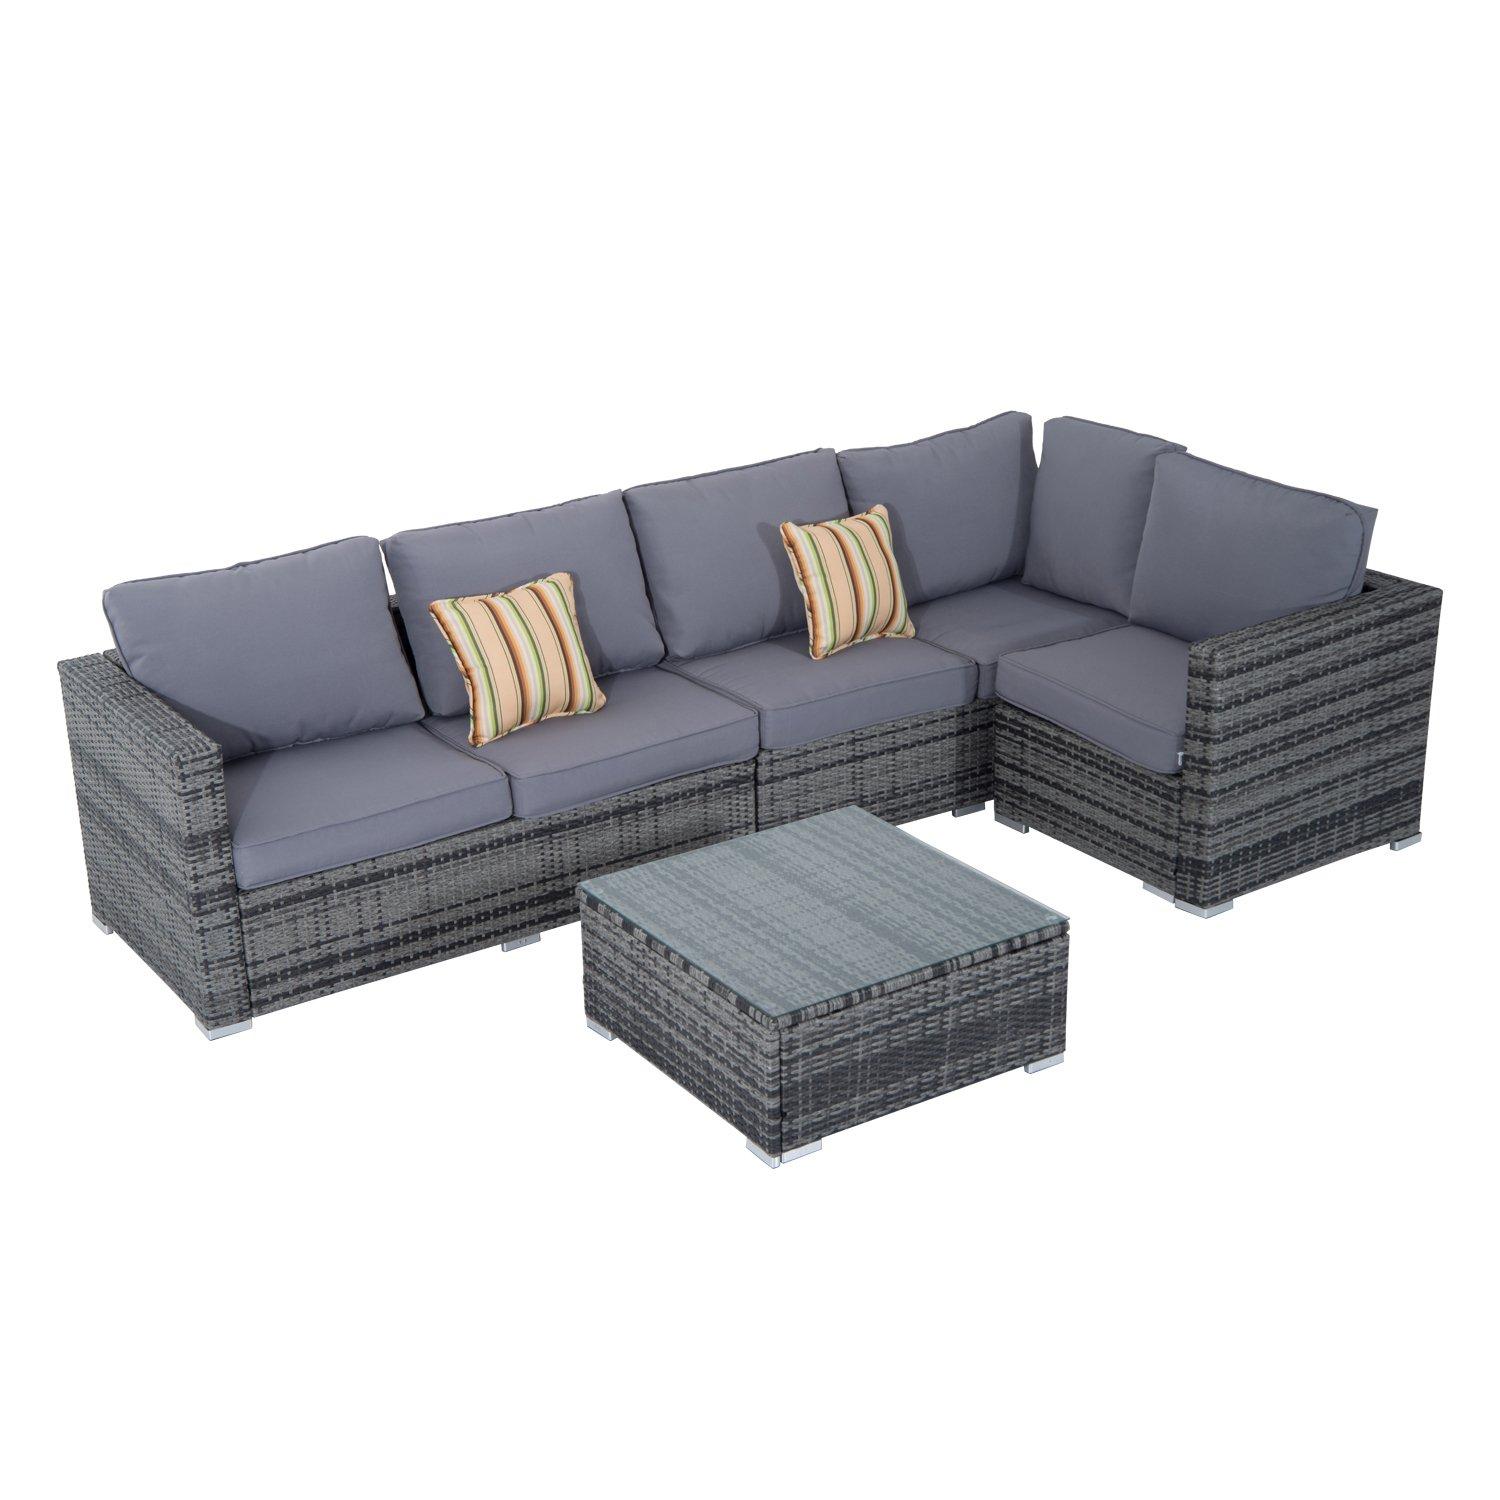 4 PCs Rattan Furniture Set Sofa Chair Seat Wicker Coffee Table Aluminum Grey